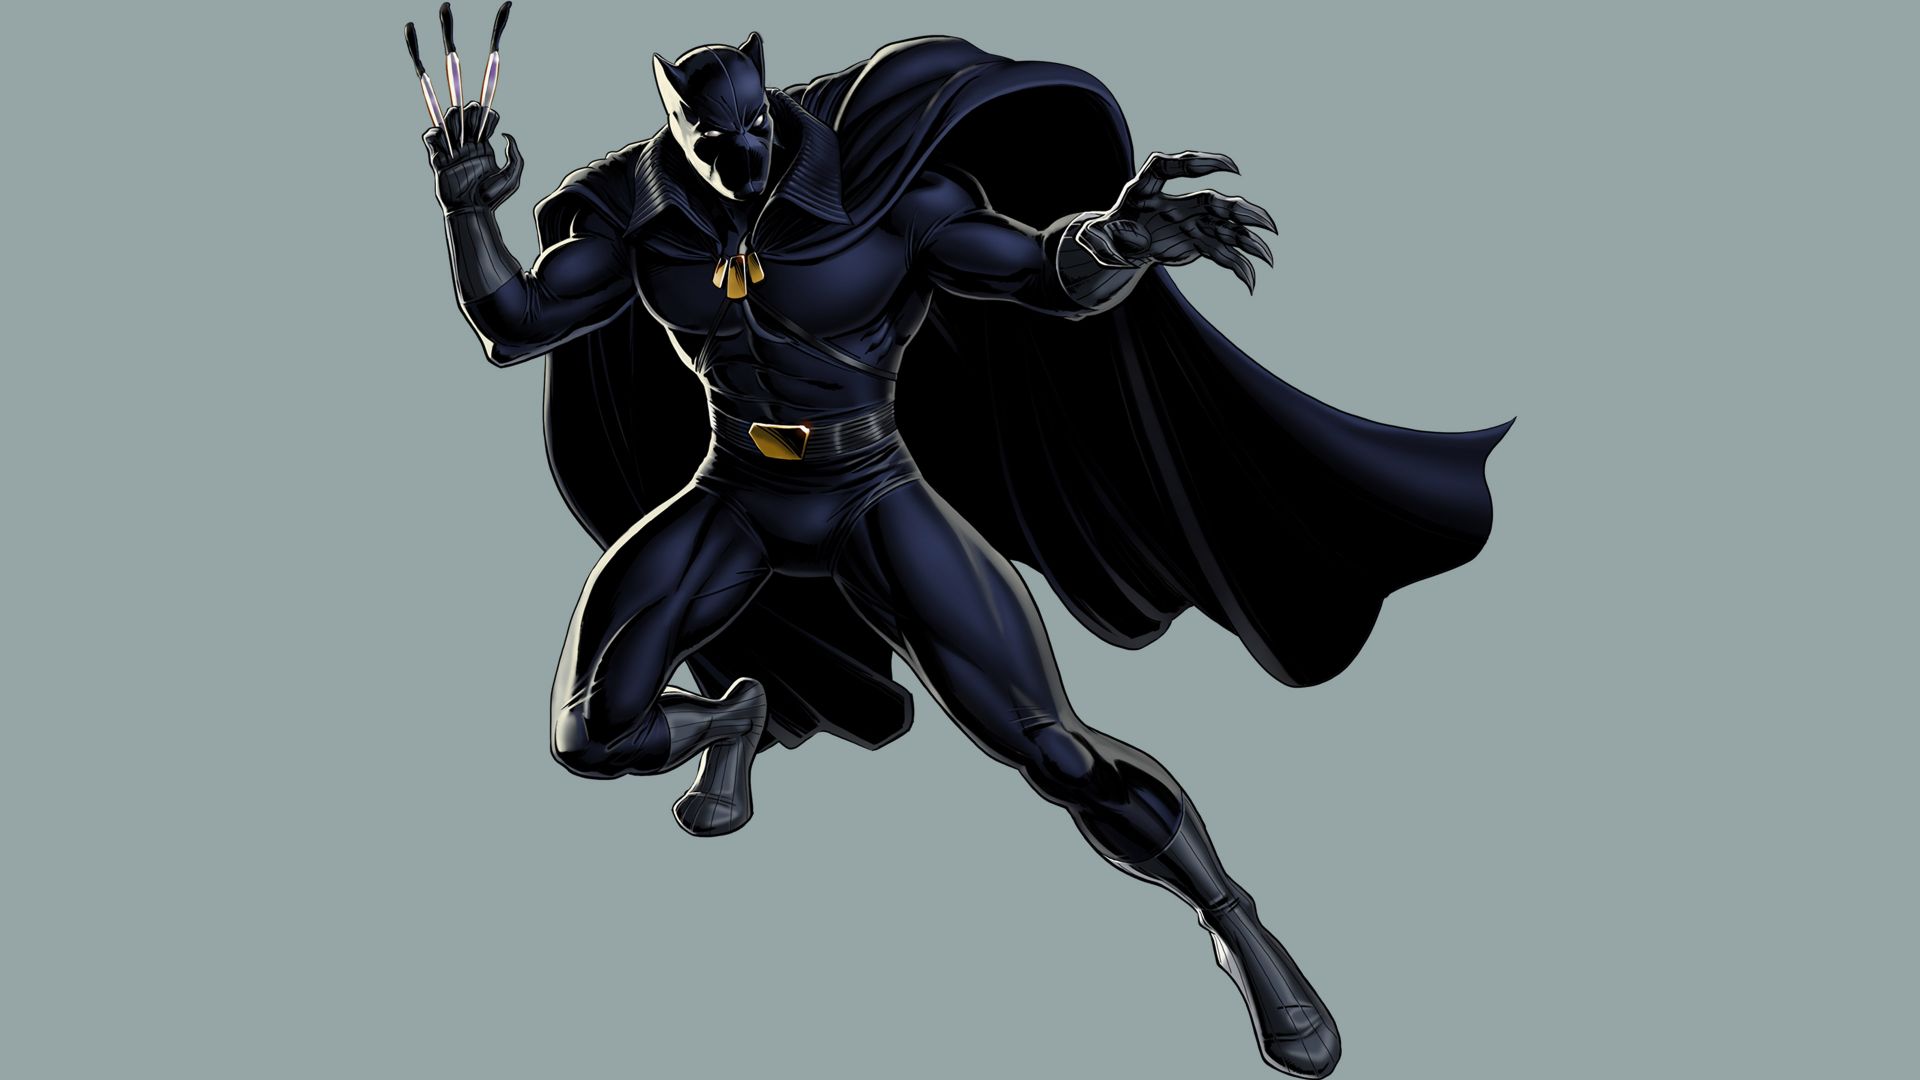 Wallpaper Black panther fictional superhero